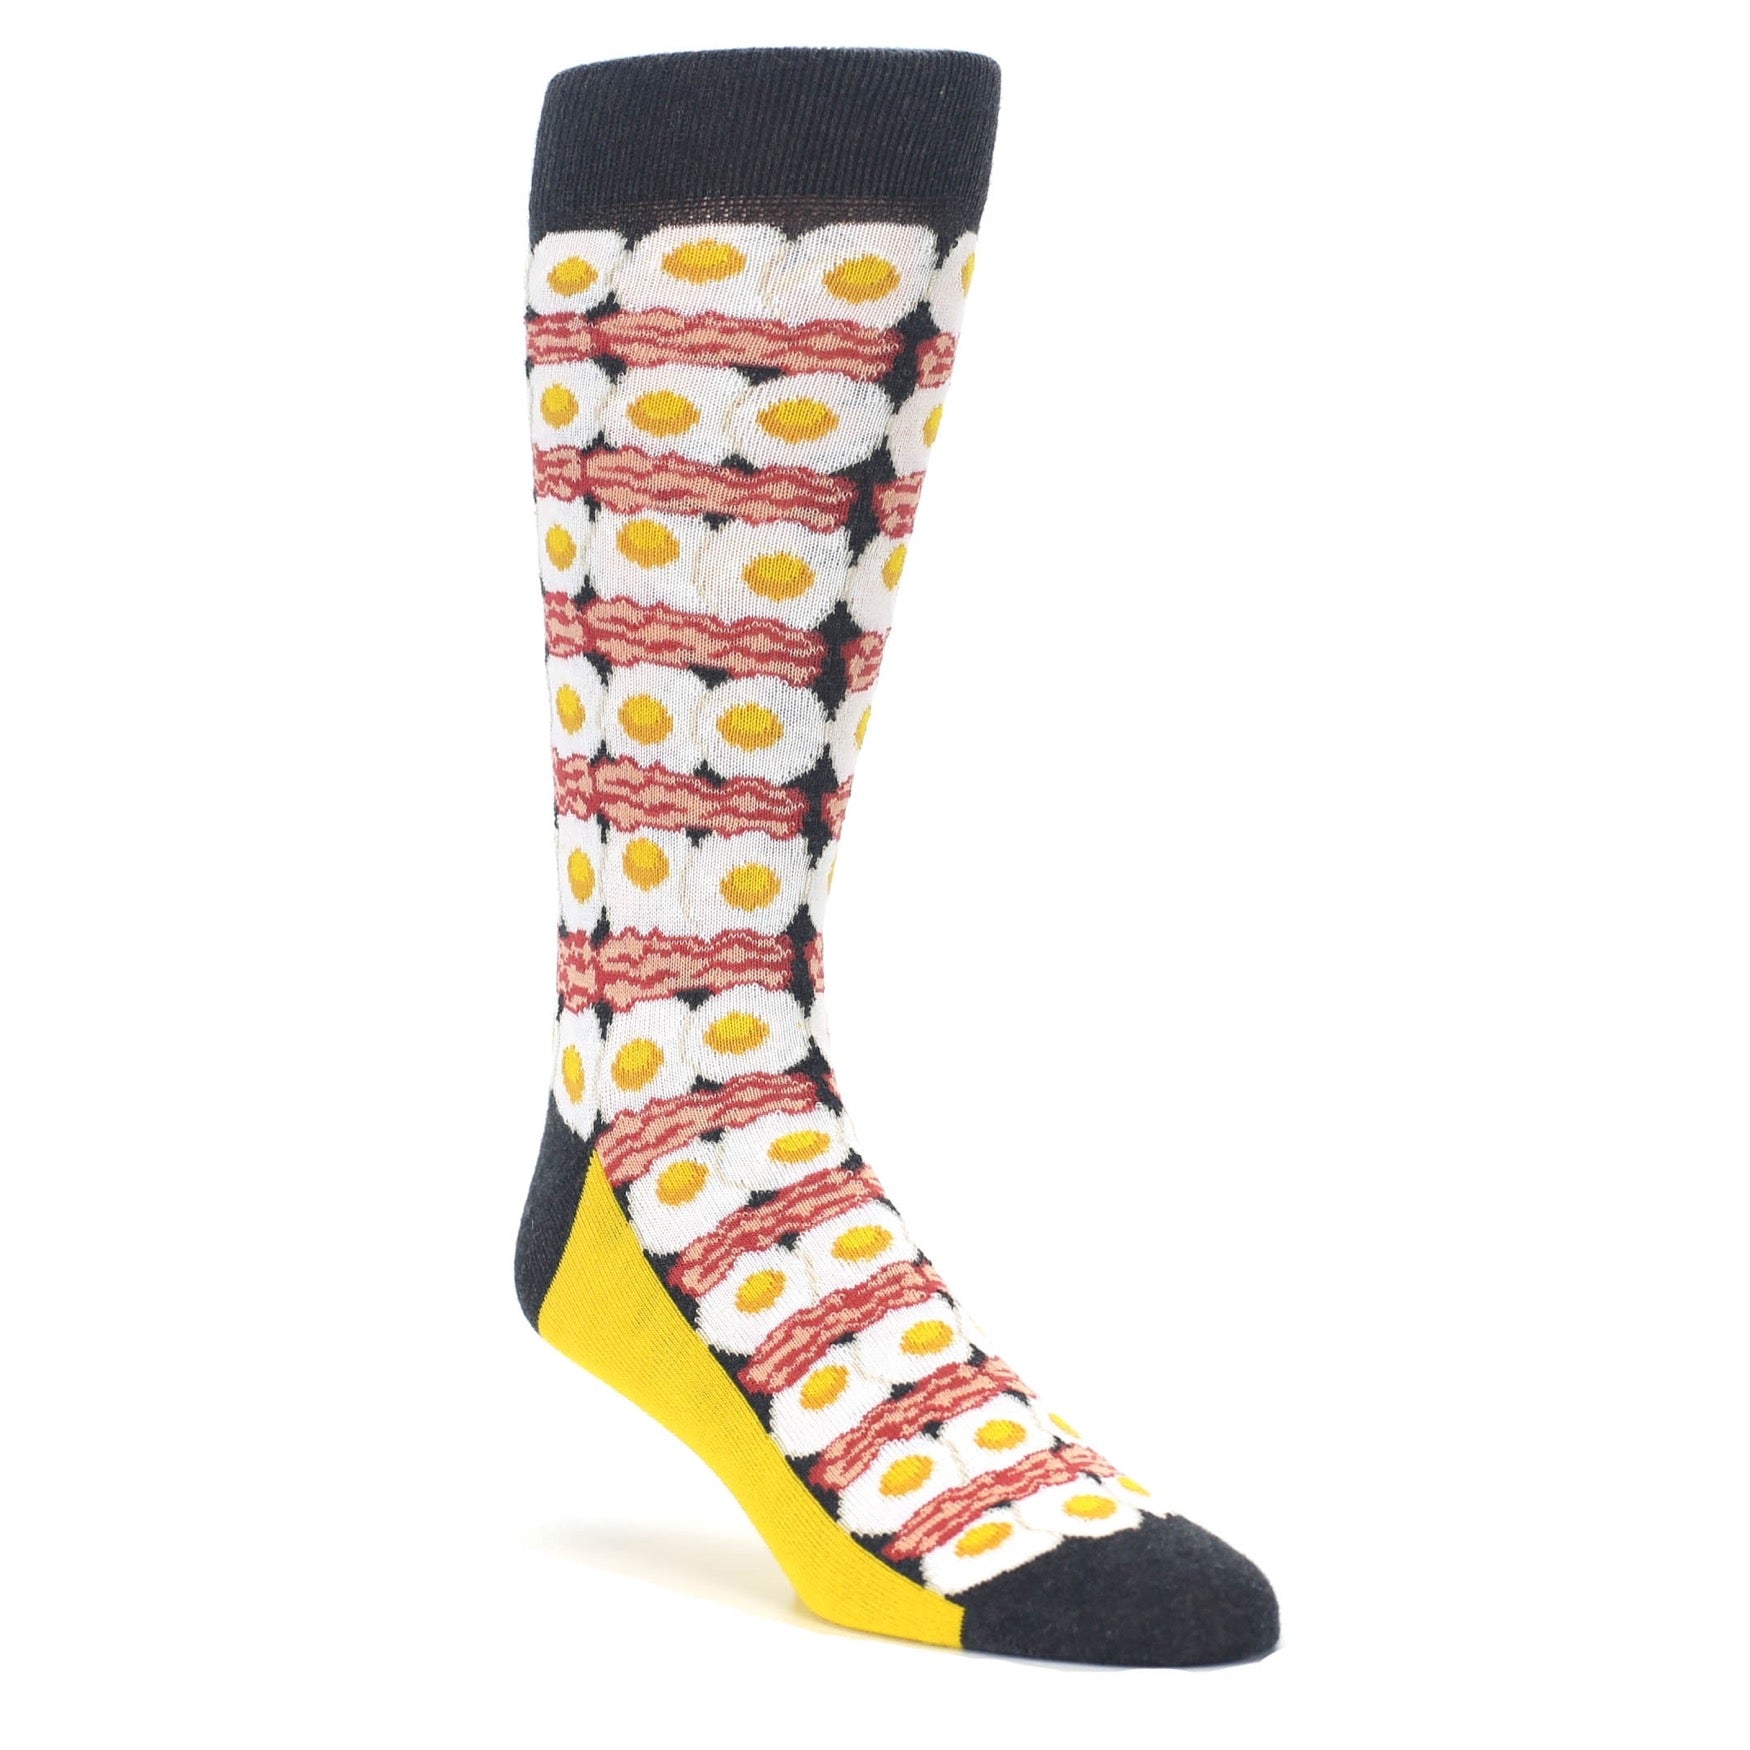 Eggs and Bacon Men's Novelty Socks by Statement Sockwear